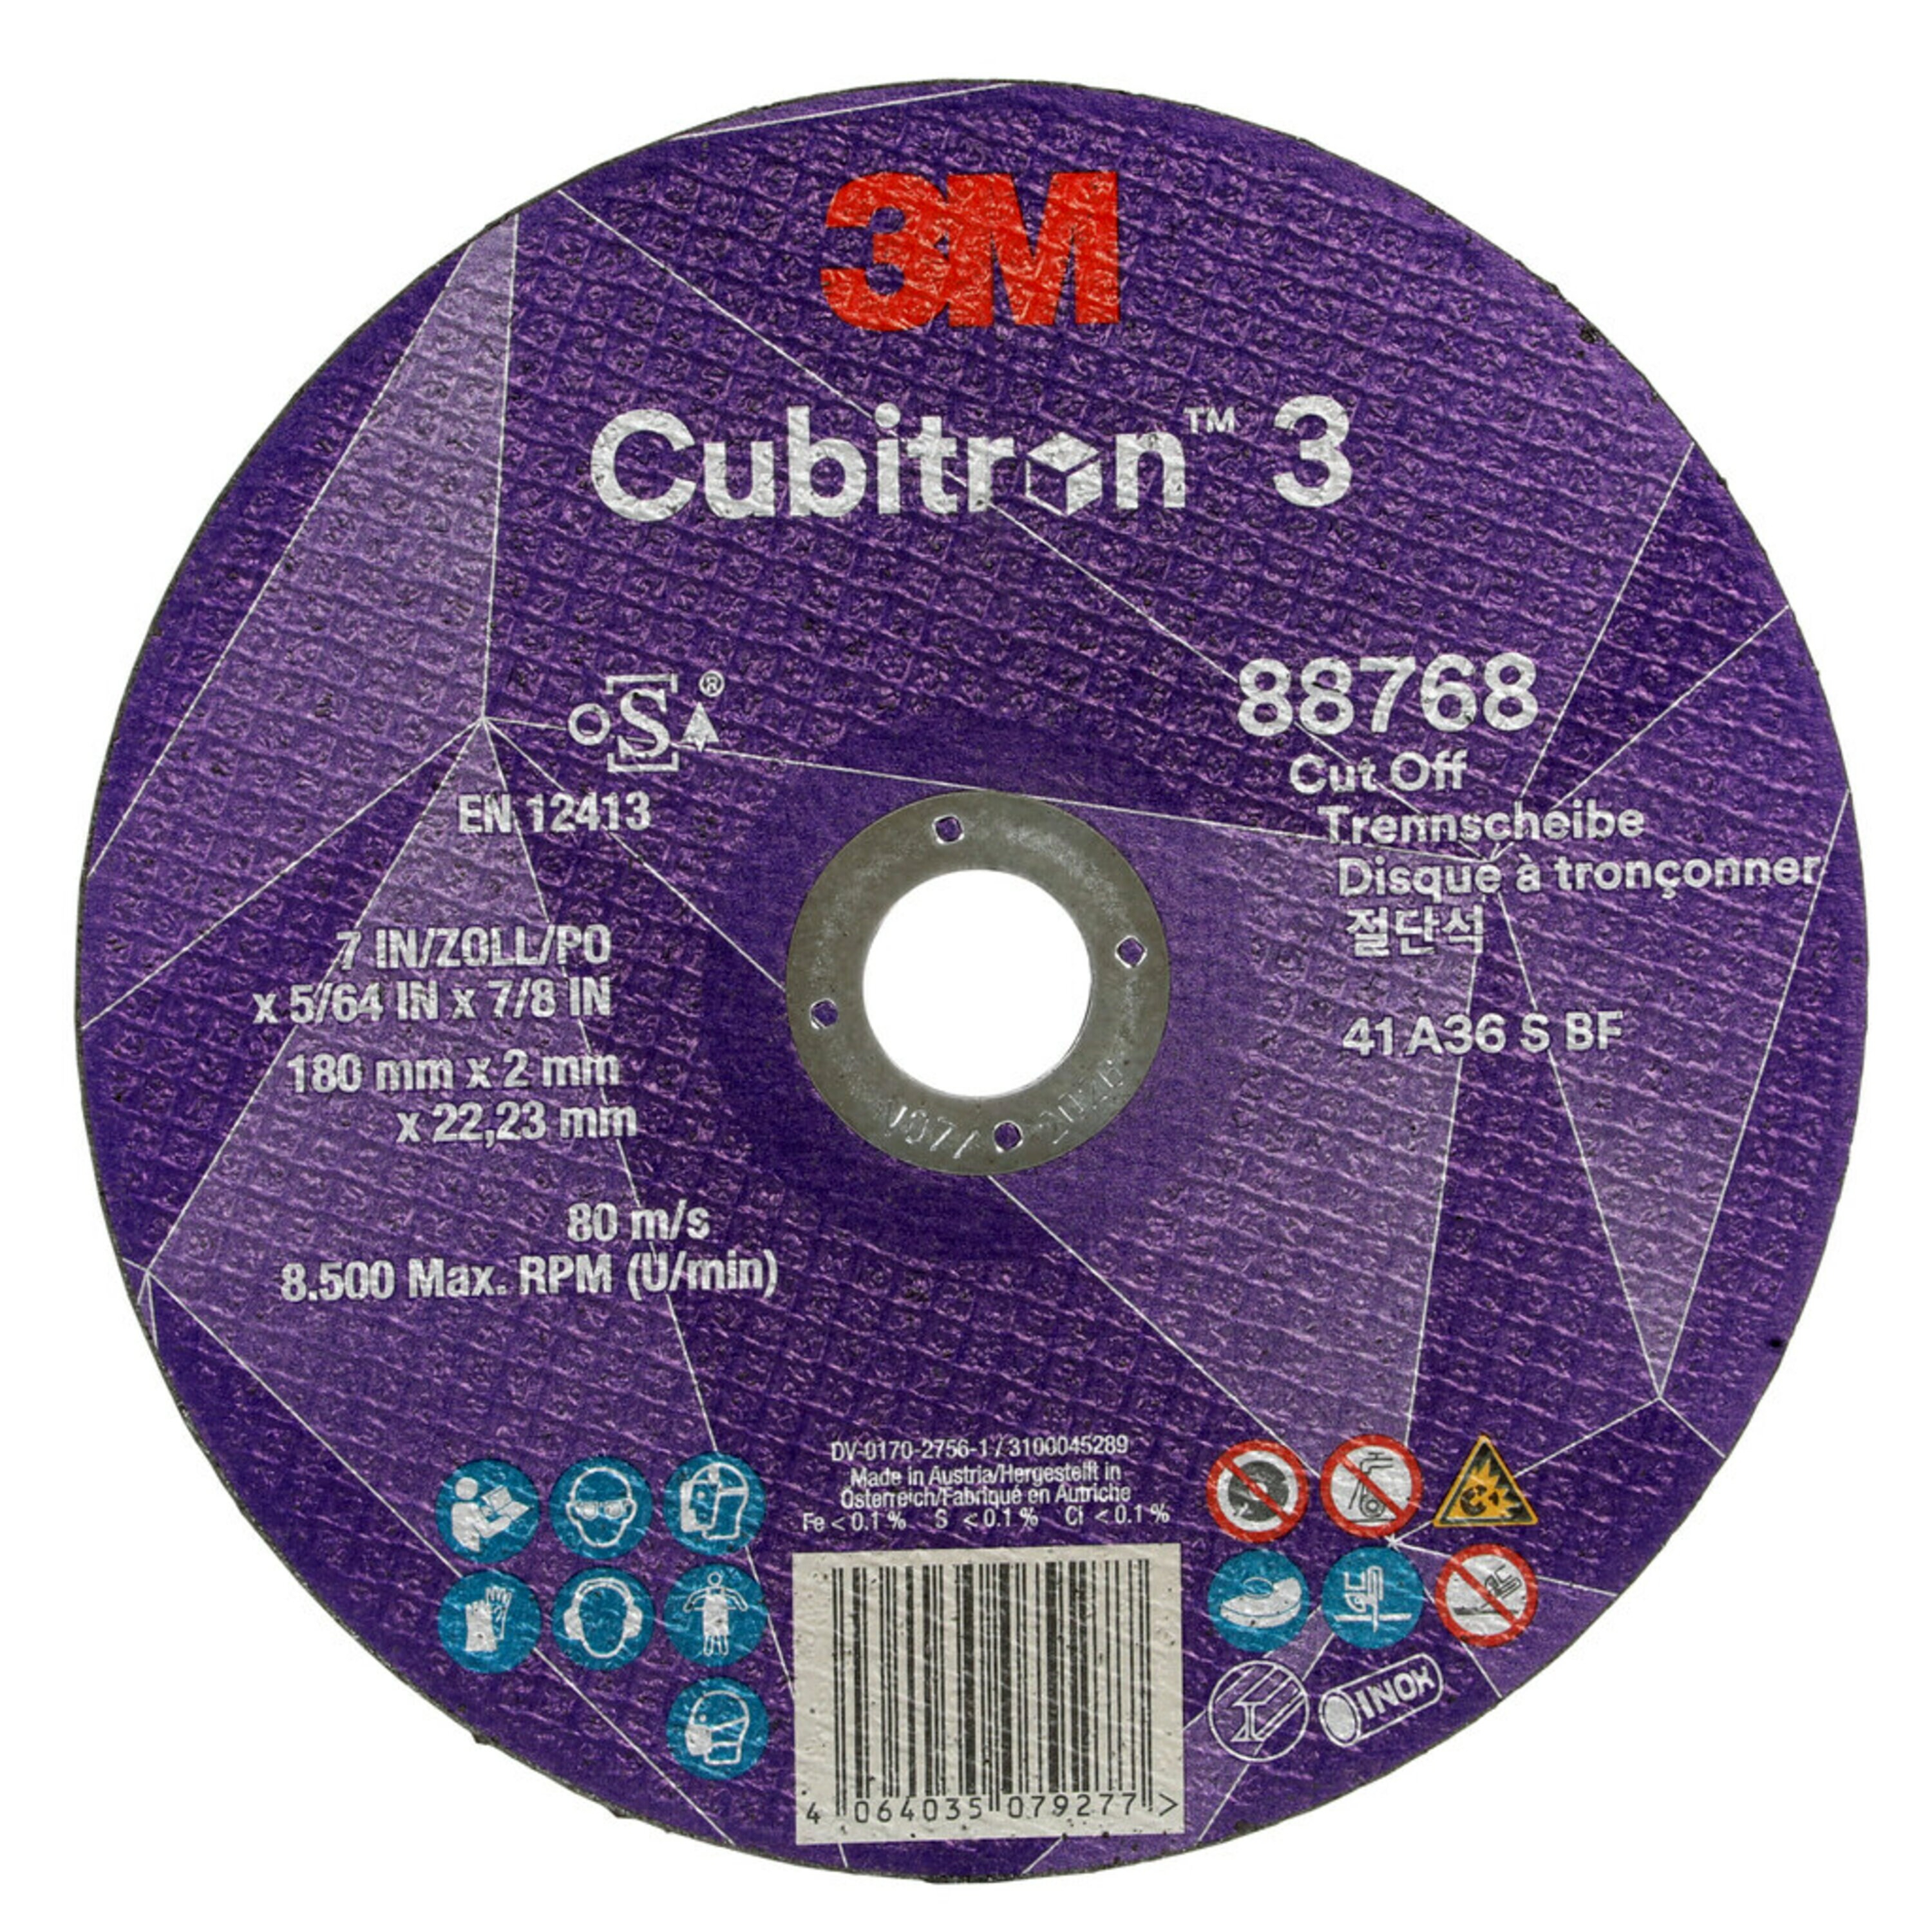 3M Cubitron 3 cut-off wheel, 180 mm, 2 mm, 22.23 mm, 36+, type 41 #88768